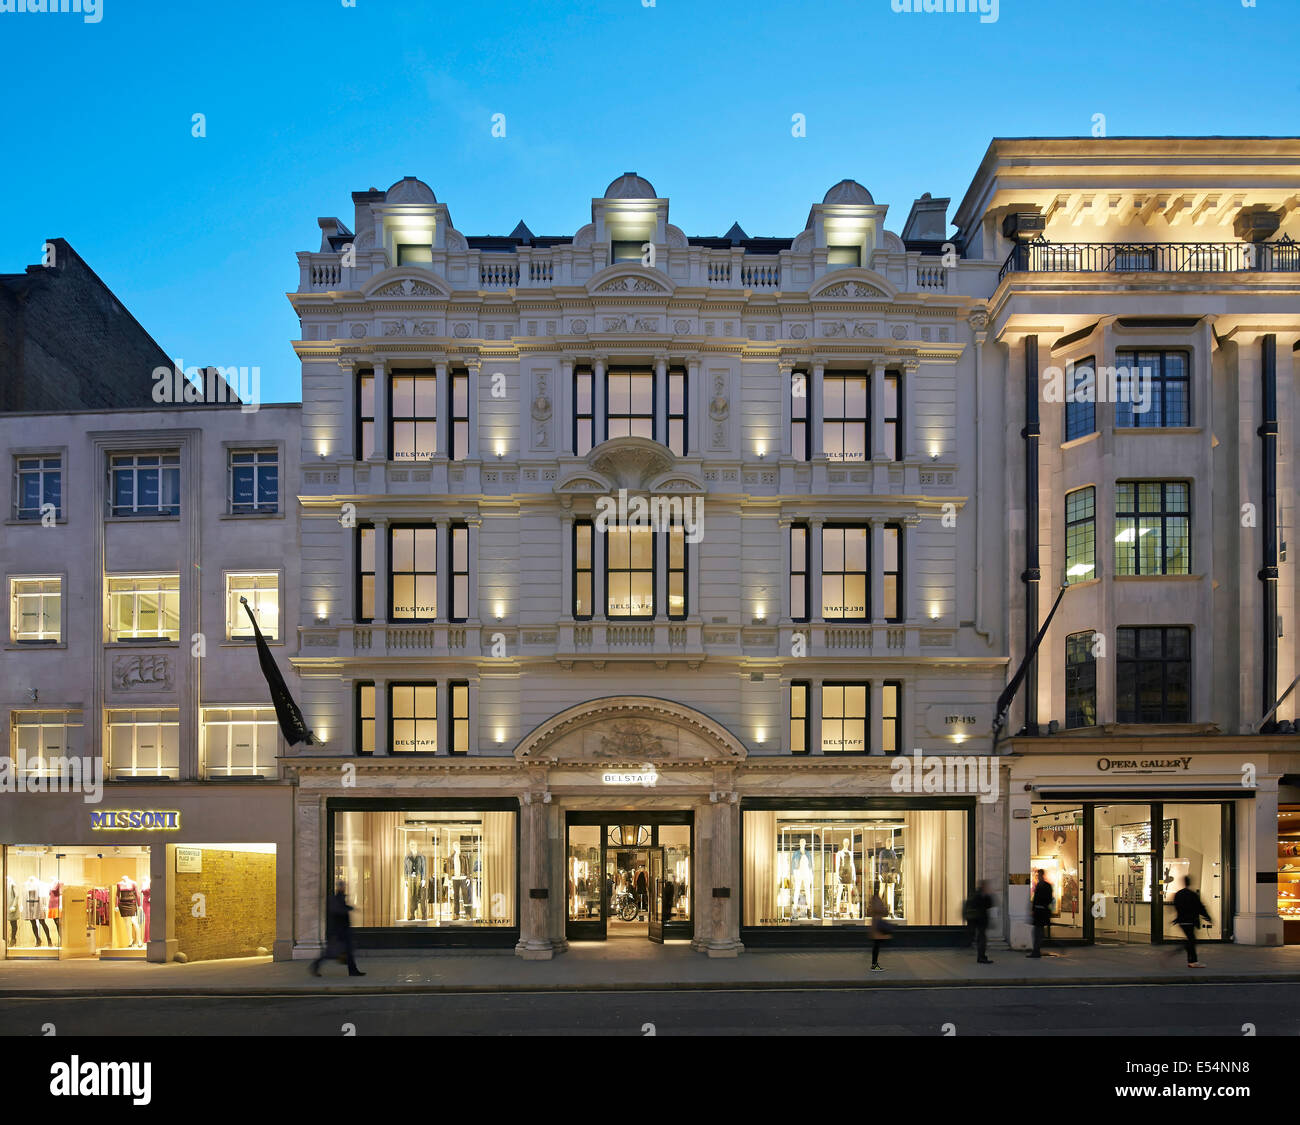 135 Belstaff New Bond Street, Londres, Reino Unido. Arquitecto: John McAslan & Partners, 2014. Foto de stock